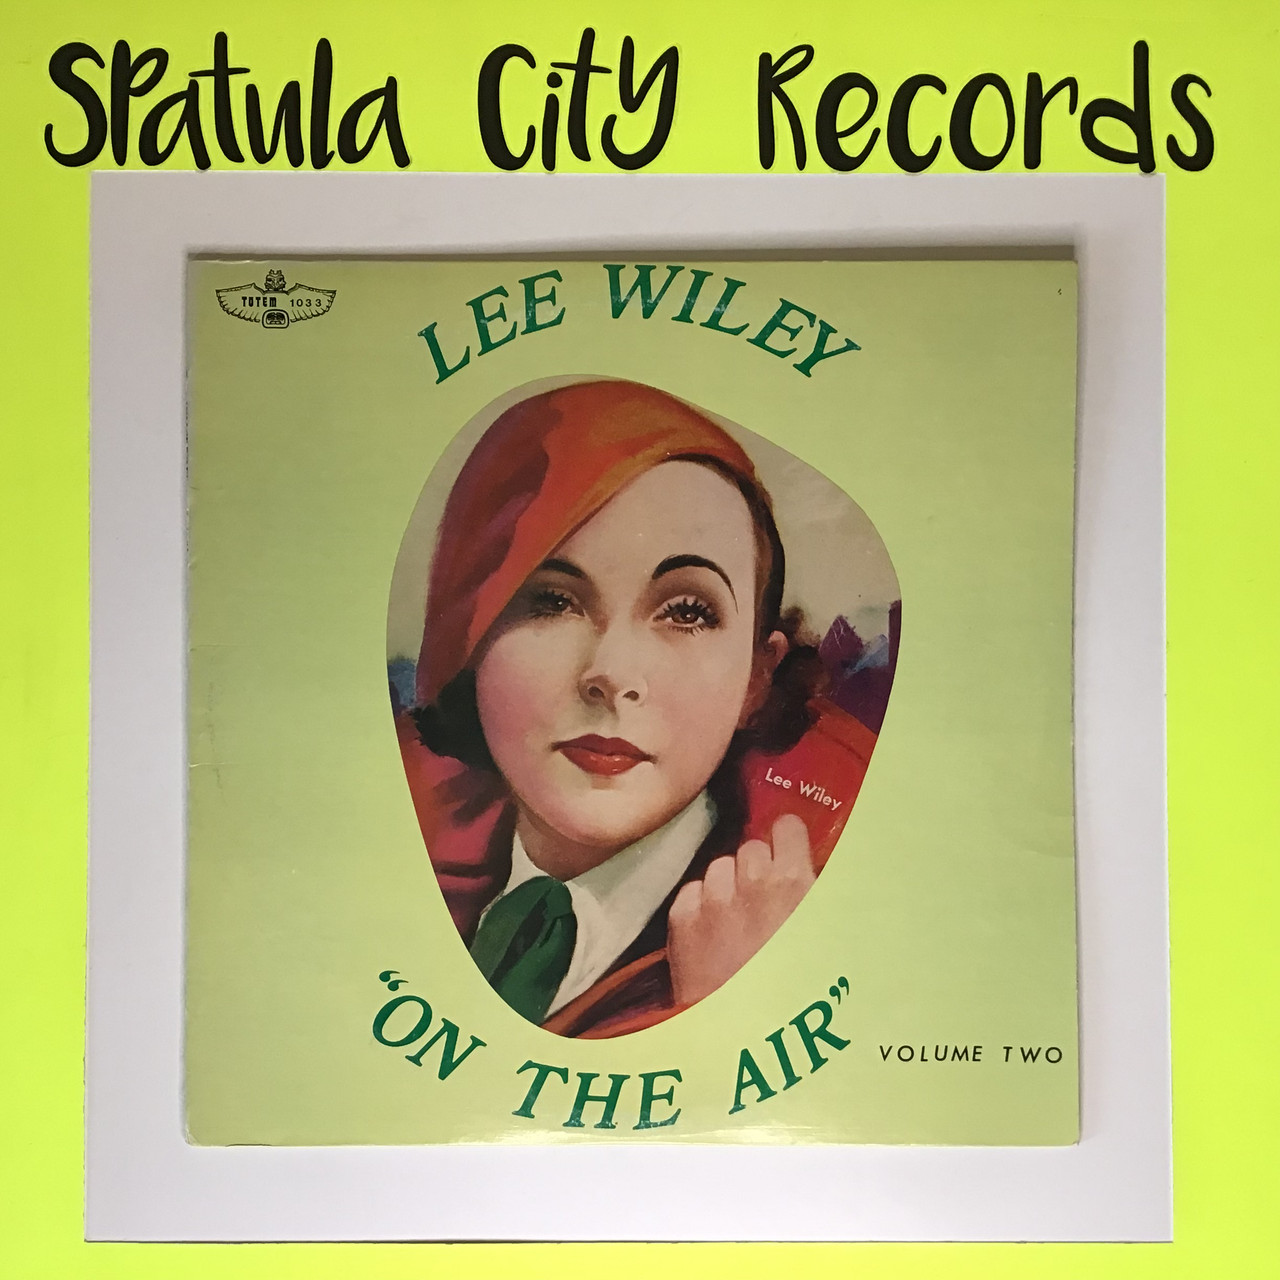 Lee Wiley - On the Air Volume 2 - vinyl record album LP